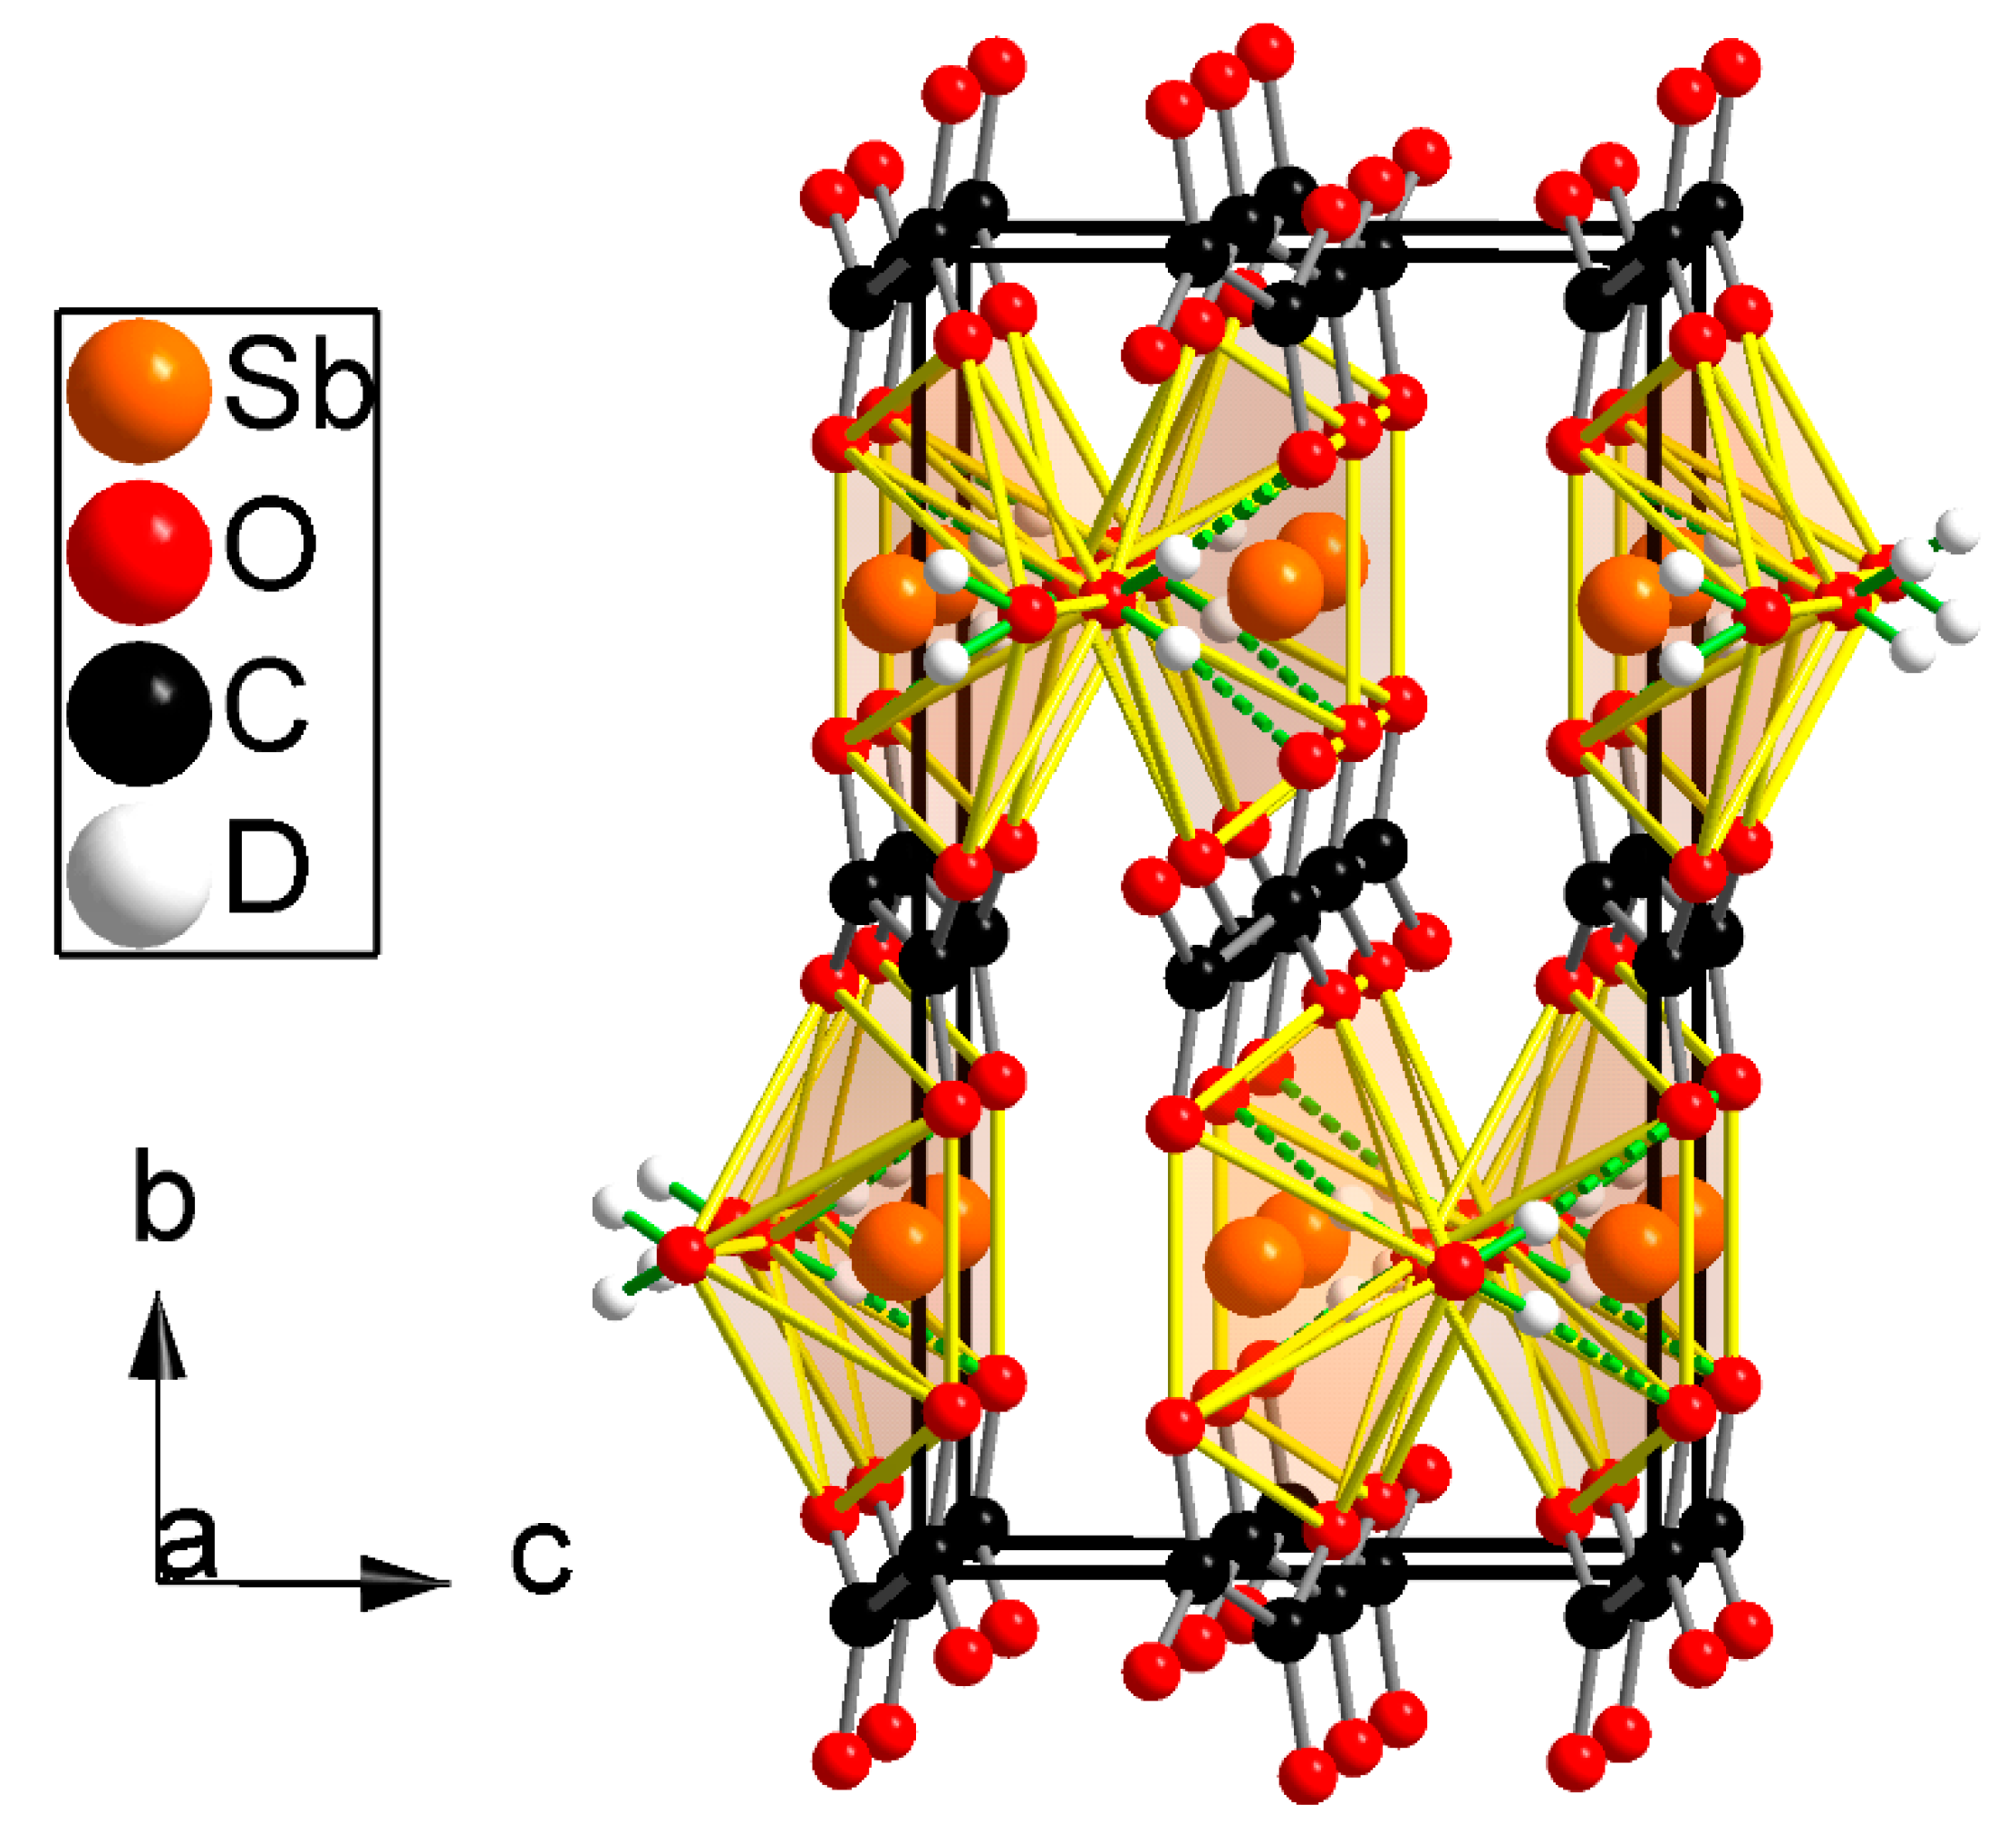 Inorganics Free Full Text Crystal Structure And Thermal Behavior Of Sbc2o4oh And Sbc2o4od Html